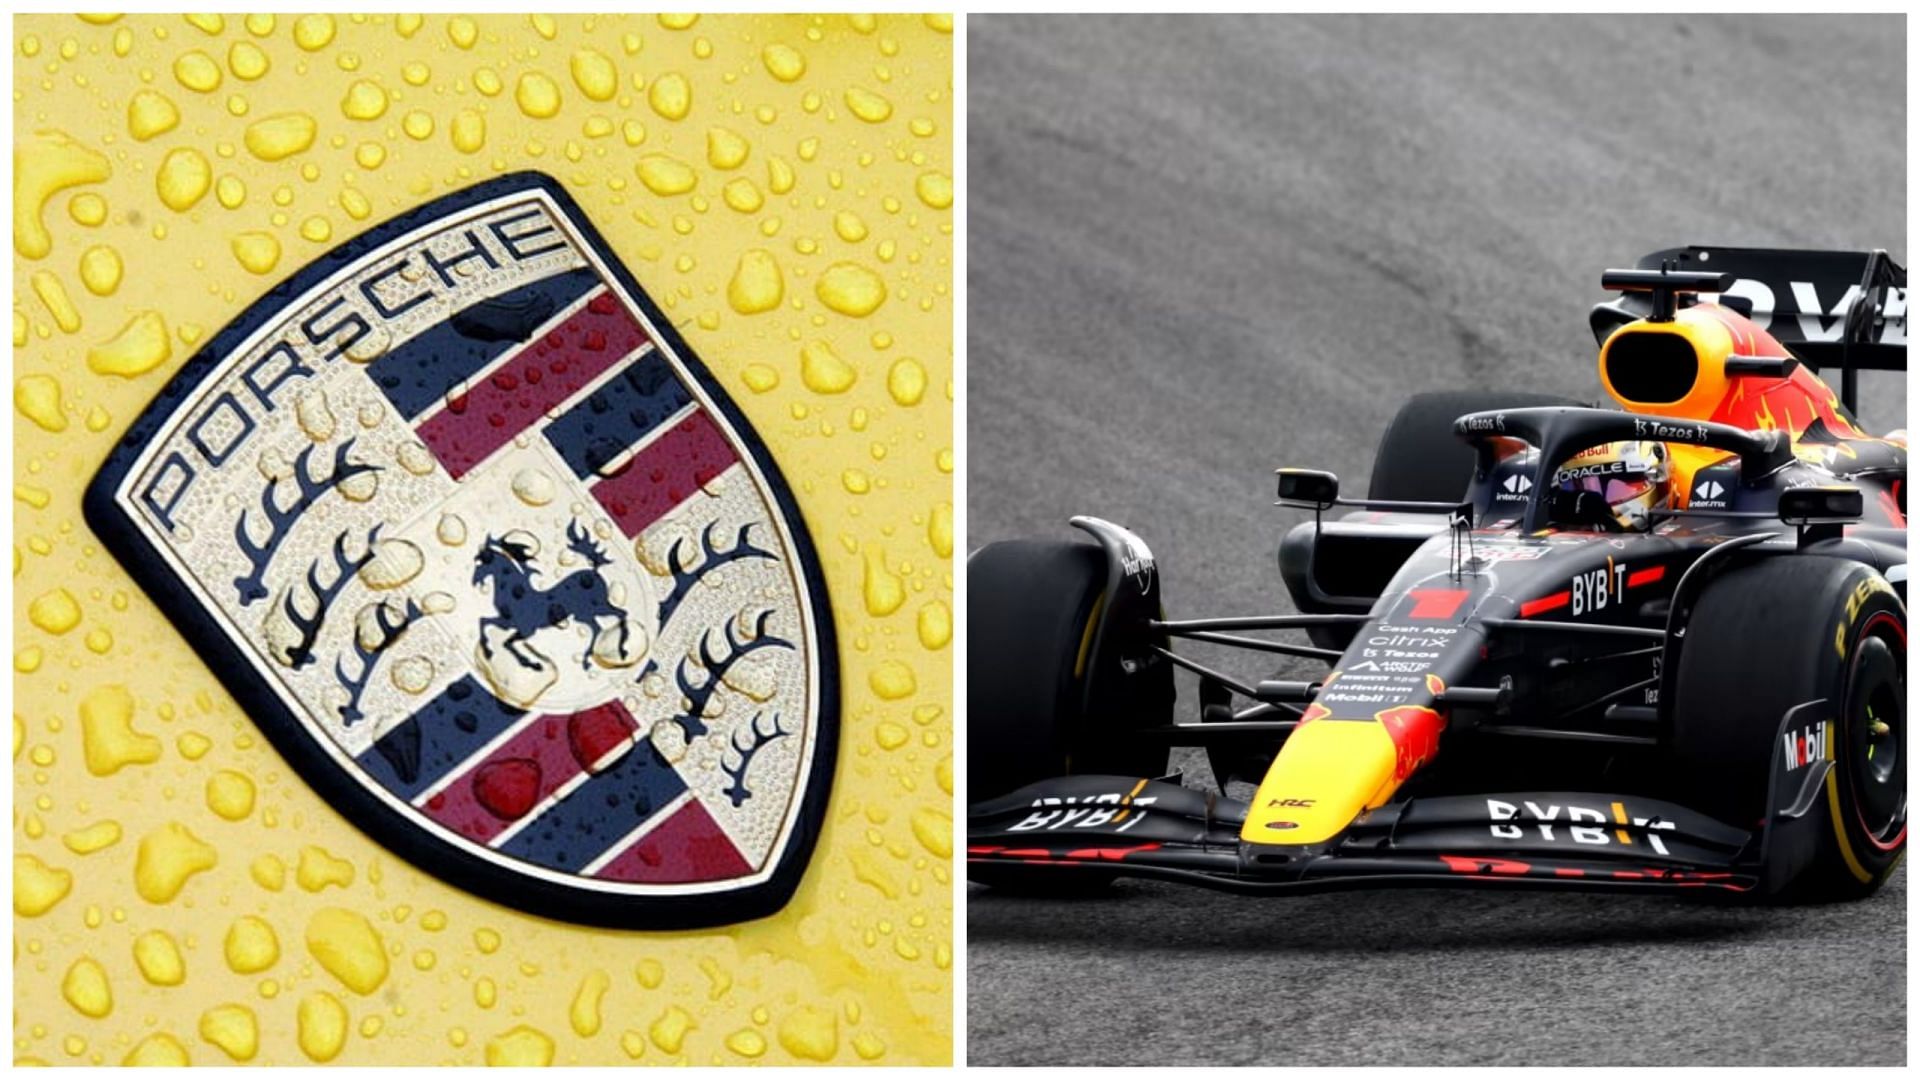 Porsche shows interest in F1 despite breaking away from Red Bull earlier